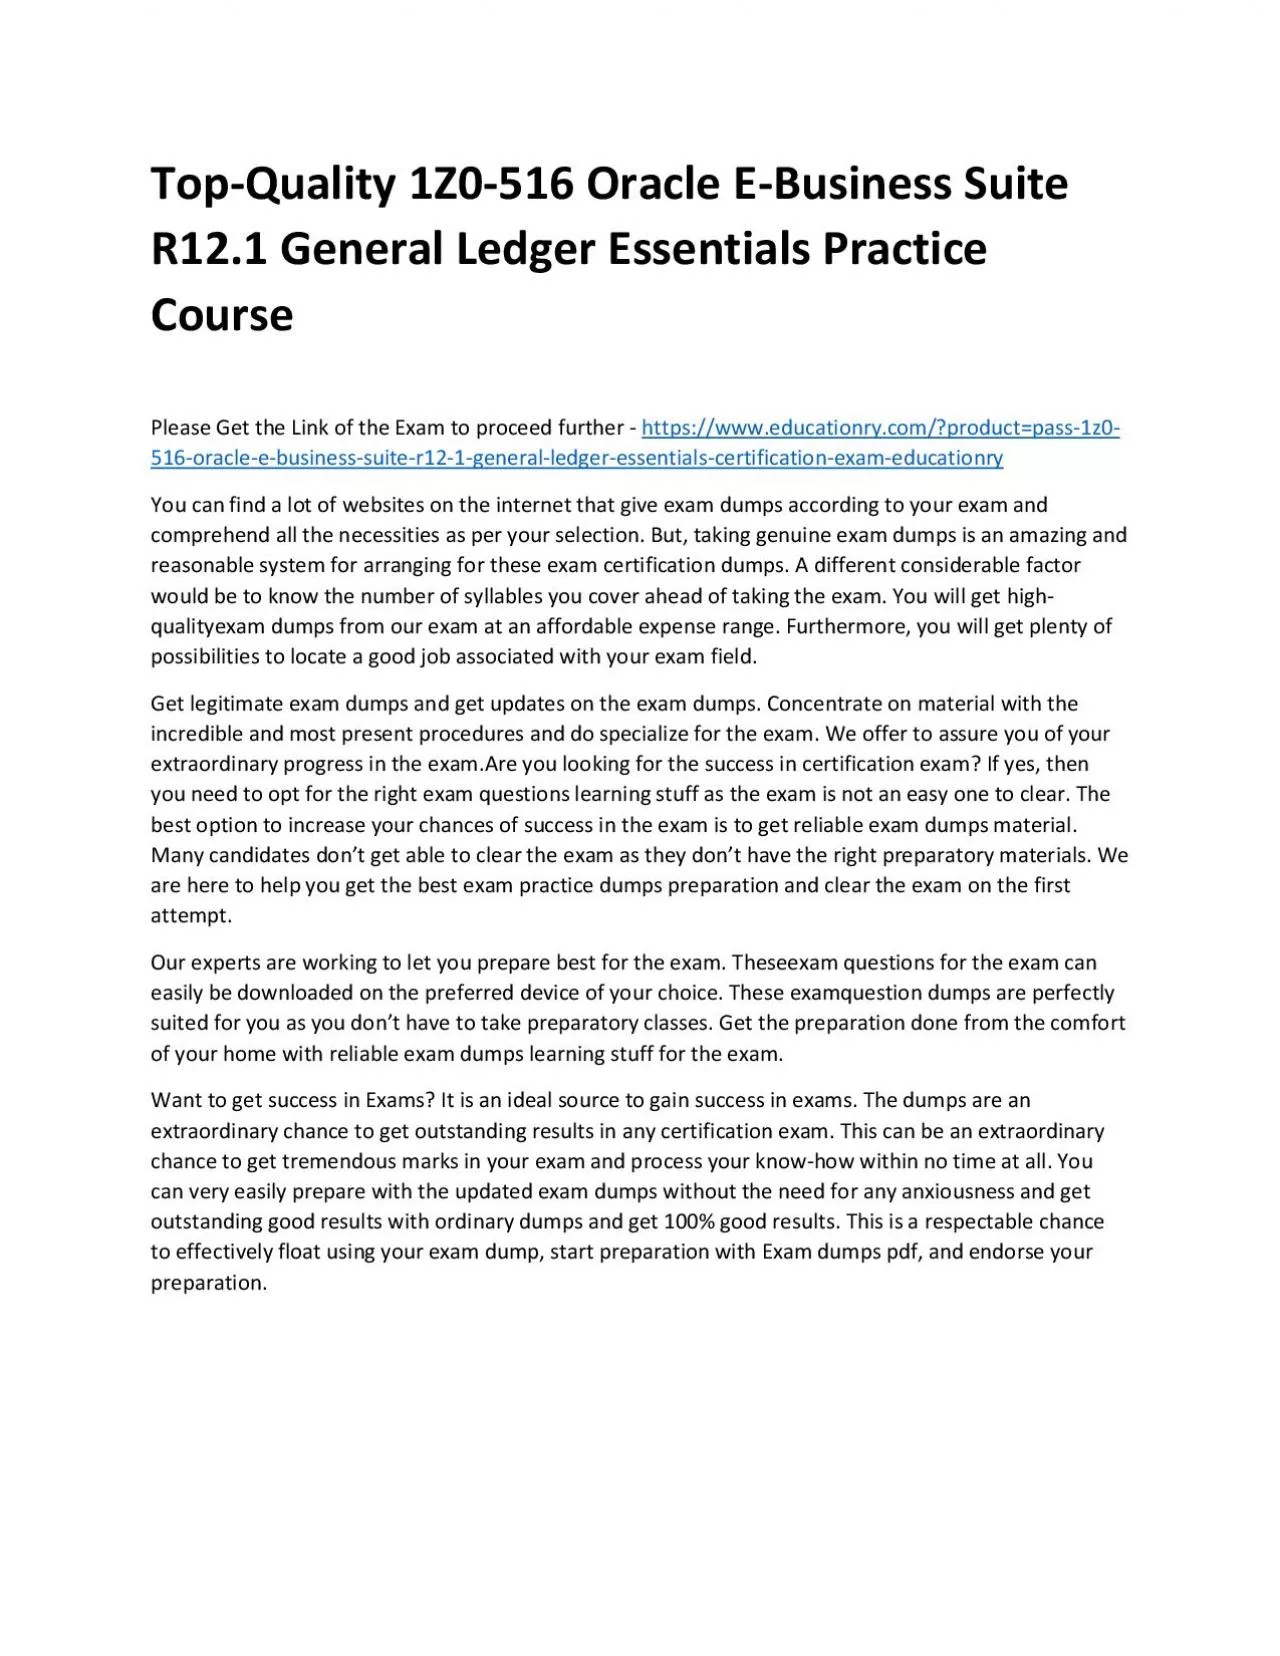 Top-Quality 1Z0-516 Oracle E-Business Suite R12.1 General Ledger Essentials Practice Course